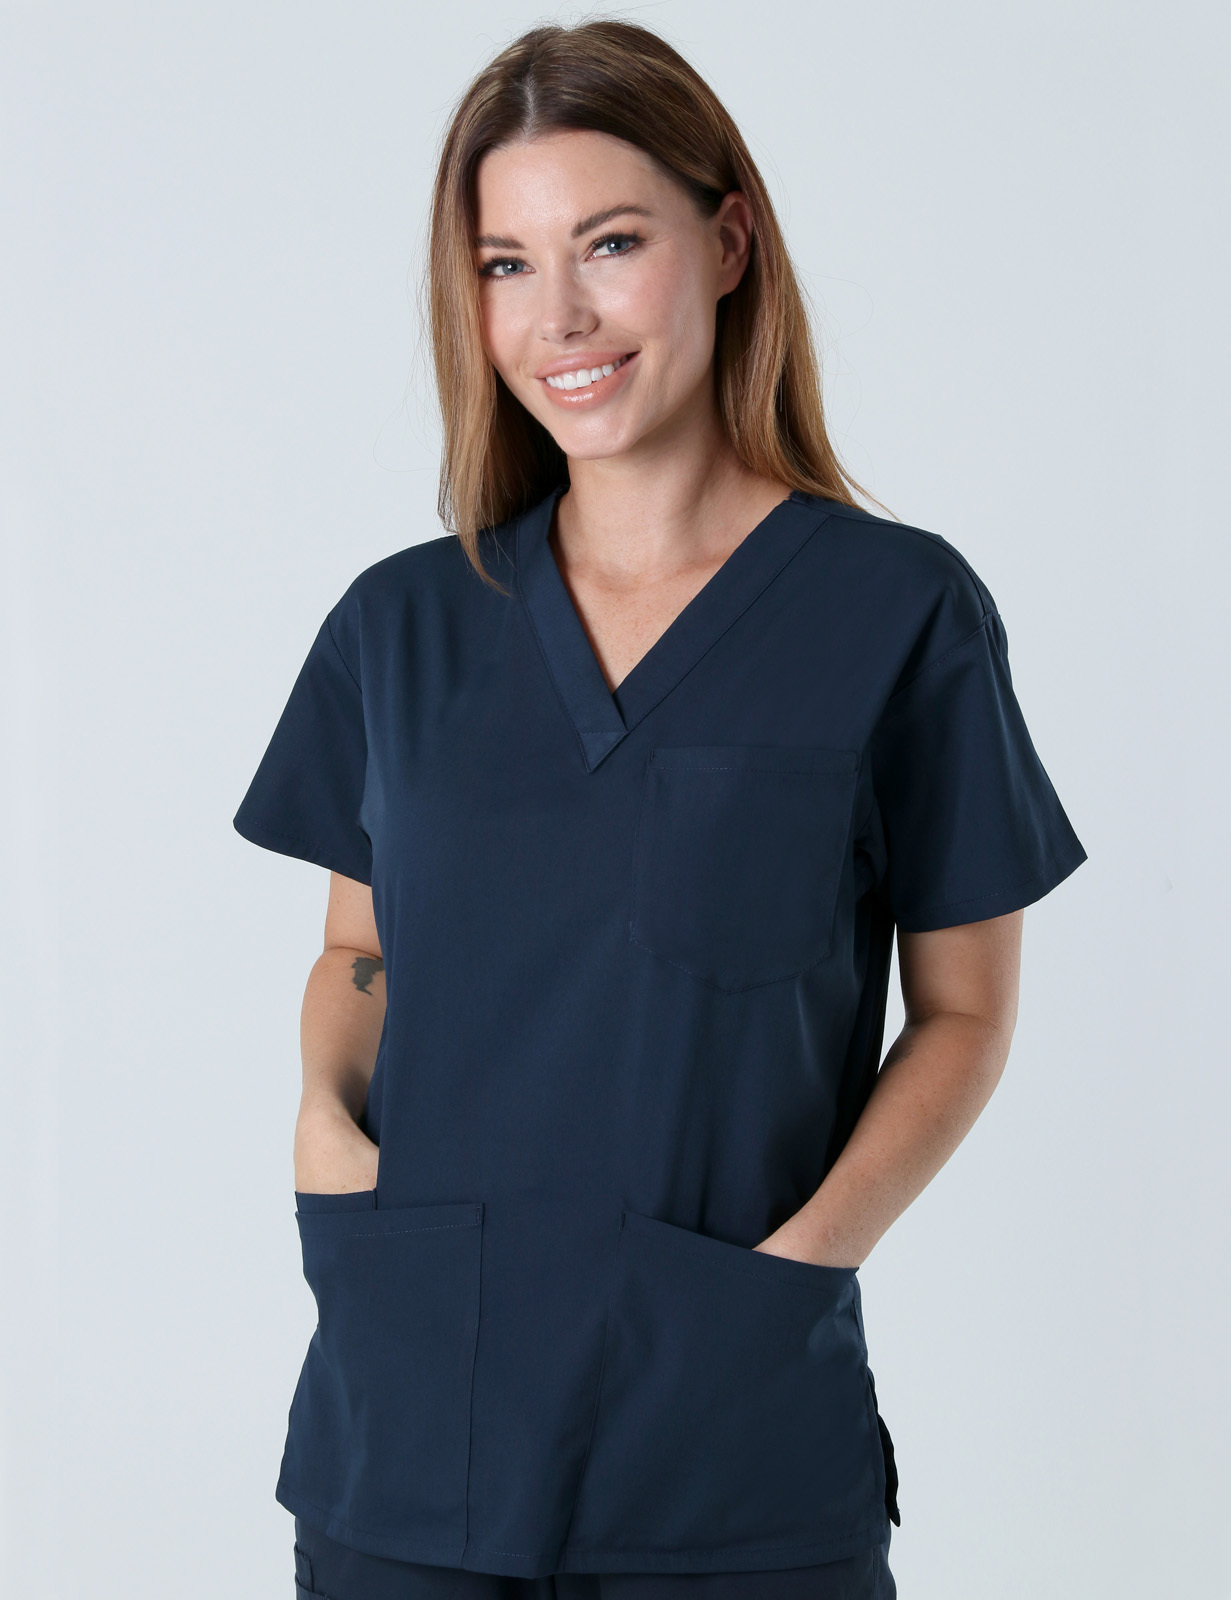 Peninsula Health Frankston - ICU Nurse (4 Pocket Scrub Top and Cargo Pants in Navy incl Logos)